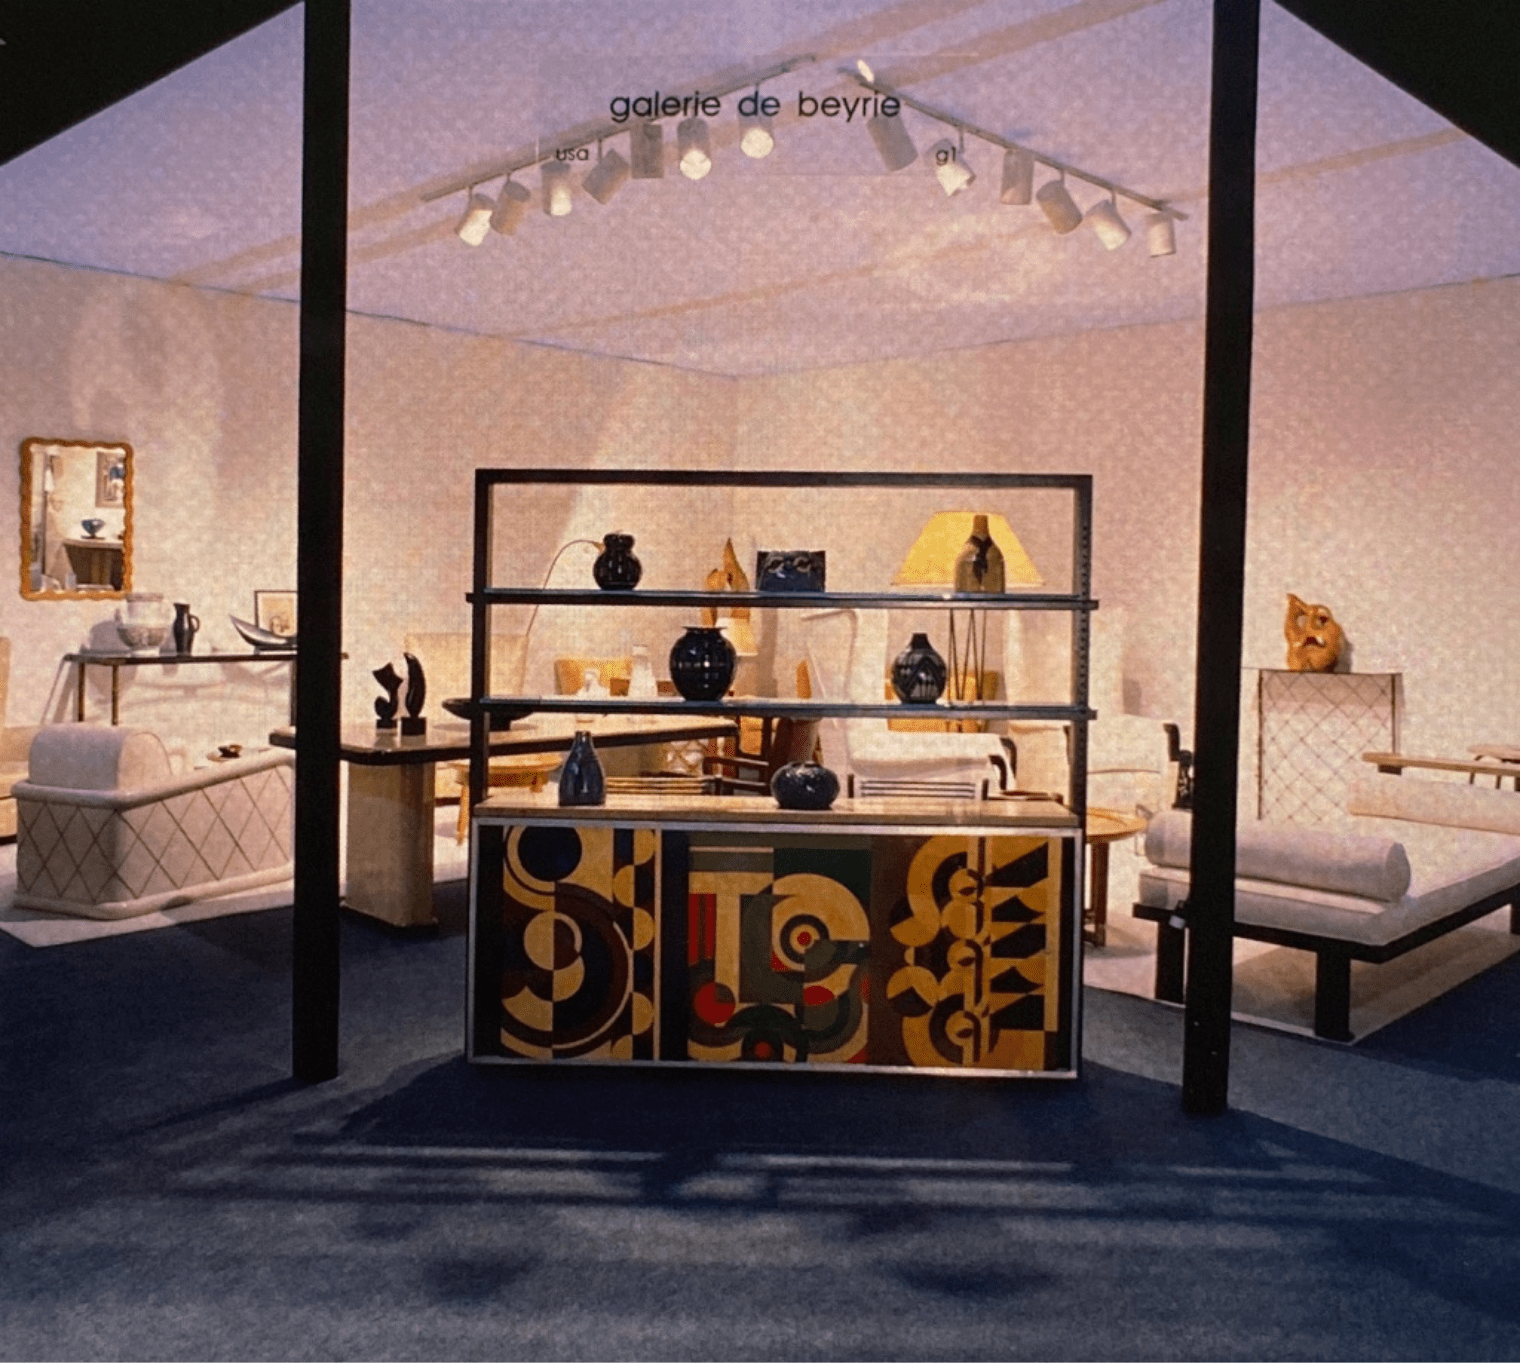 Galerie de Beyrie : XX century Haughton Show, Park Avenue Armory, New York, 1999